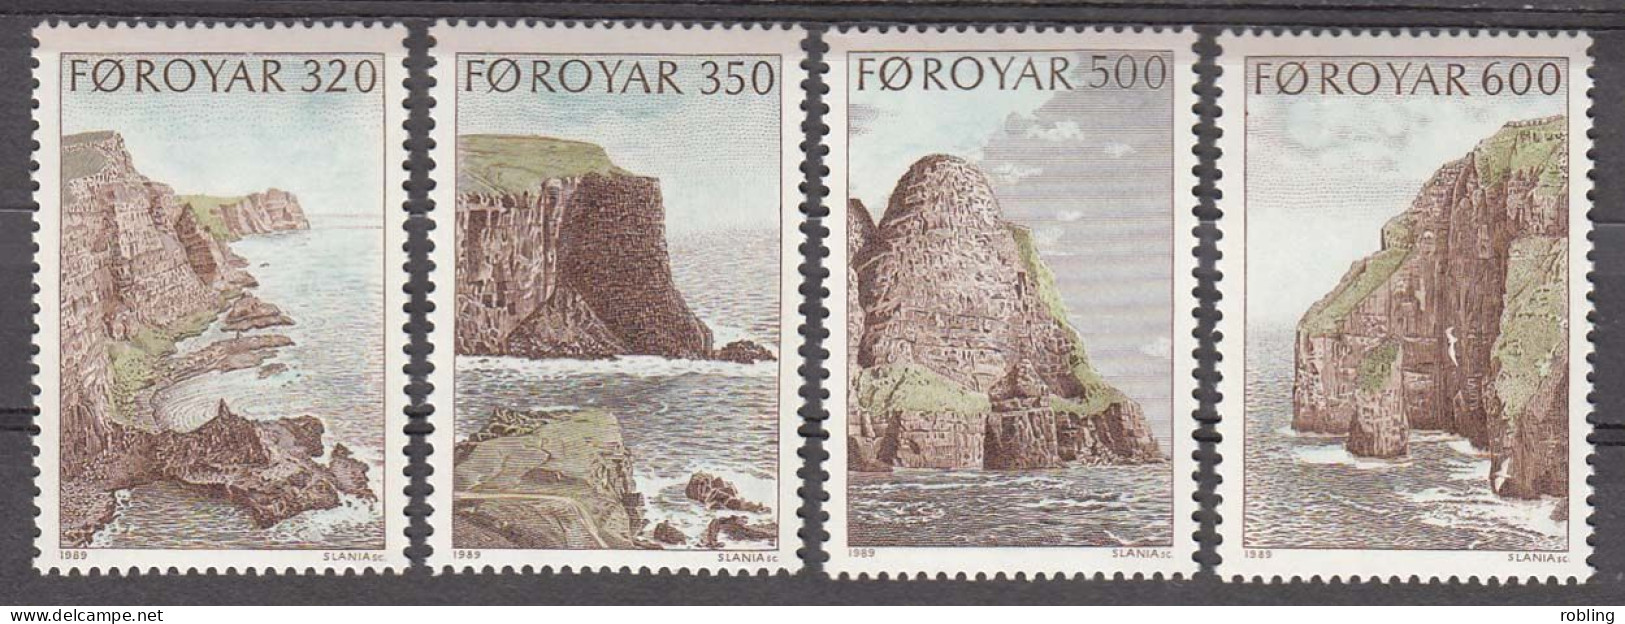 Faroe Islands 1989  Mountains Michel 190-93  MNH 30997 - Mountains